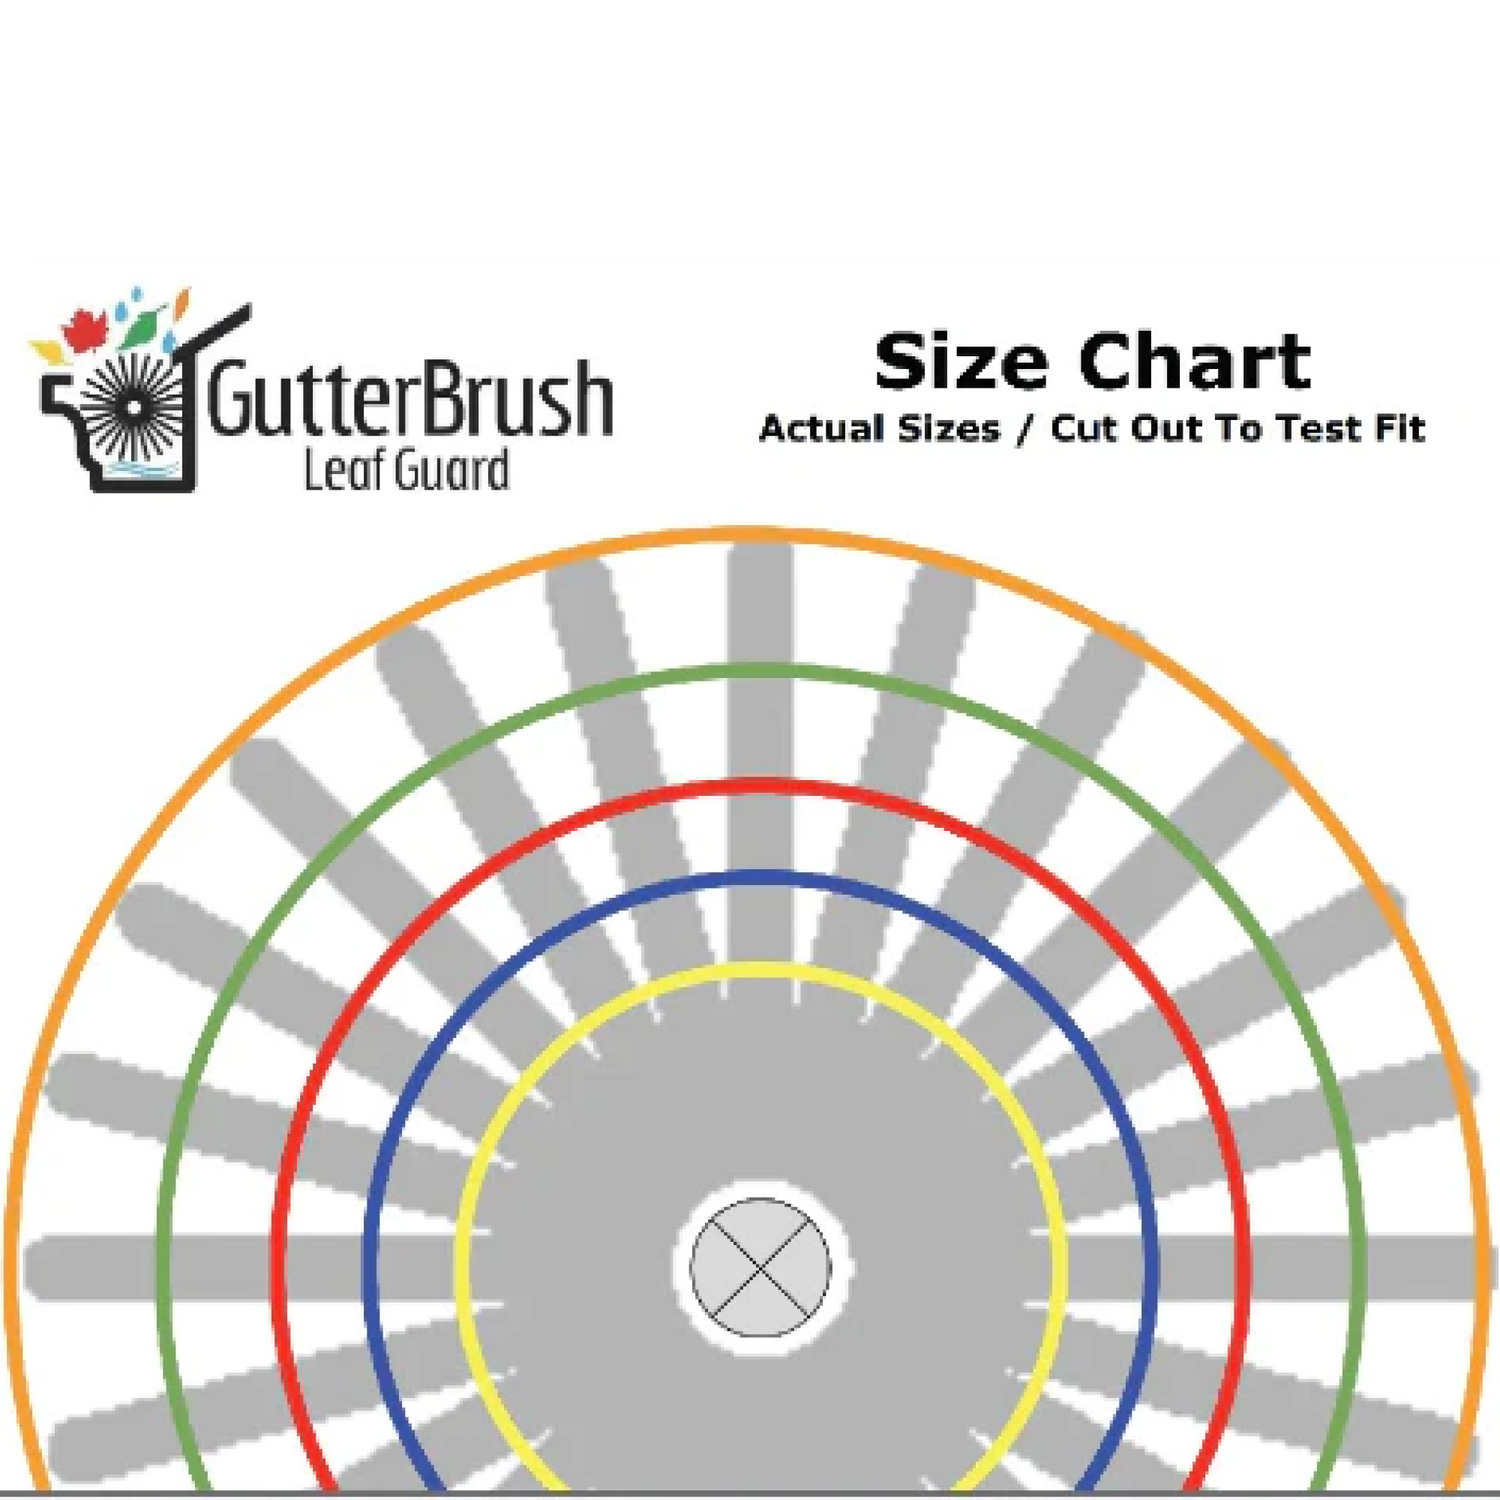 GutterBrush size chart download